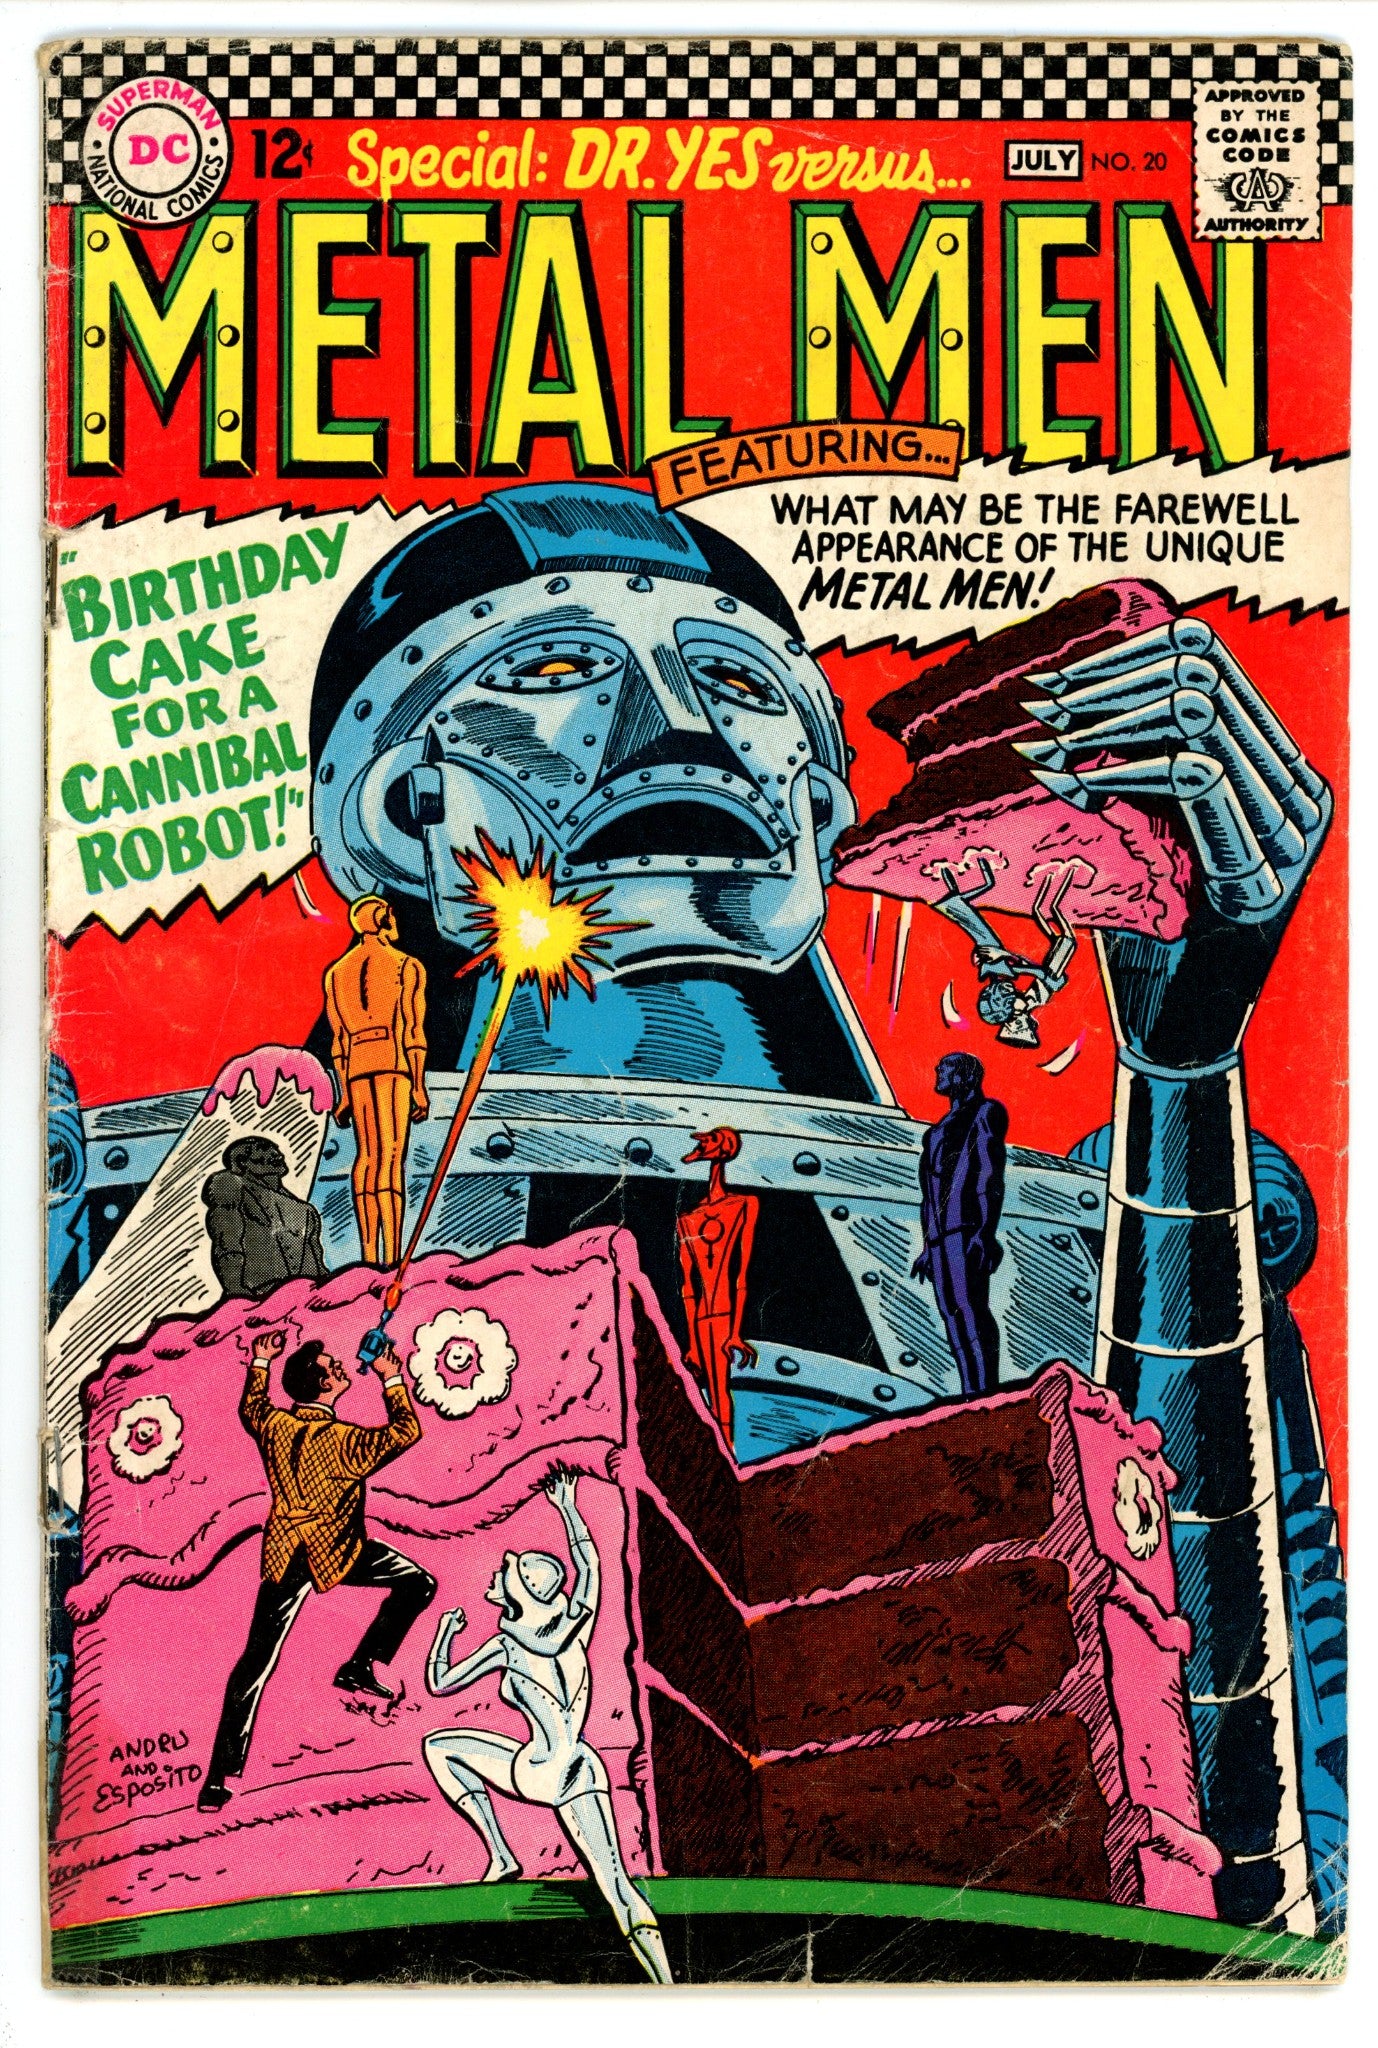 Metal Men Vol 1 20 VG- (3.5) (1966) 